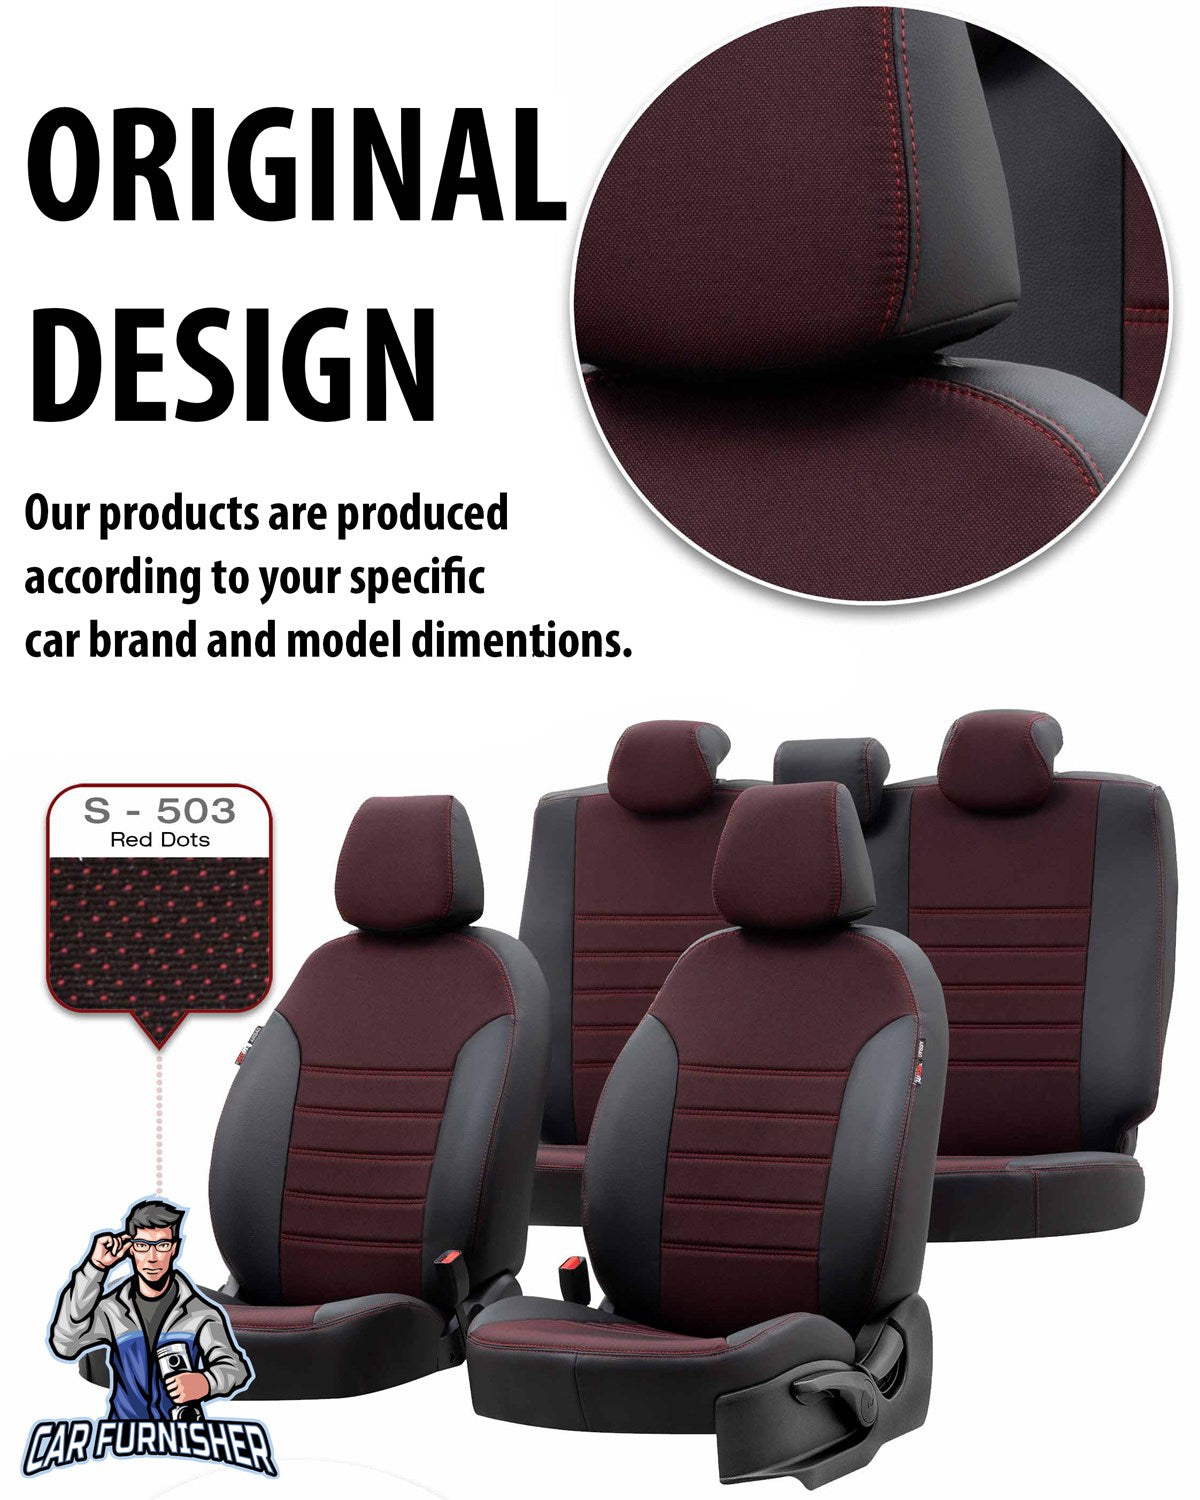 Seat Mii Seat Covers Paris Leather & Jacquard Design Red Leather & Jacquard Fabric